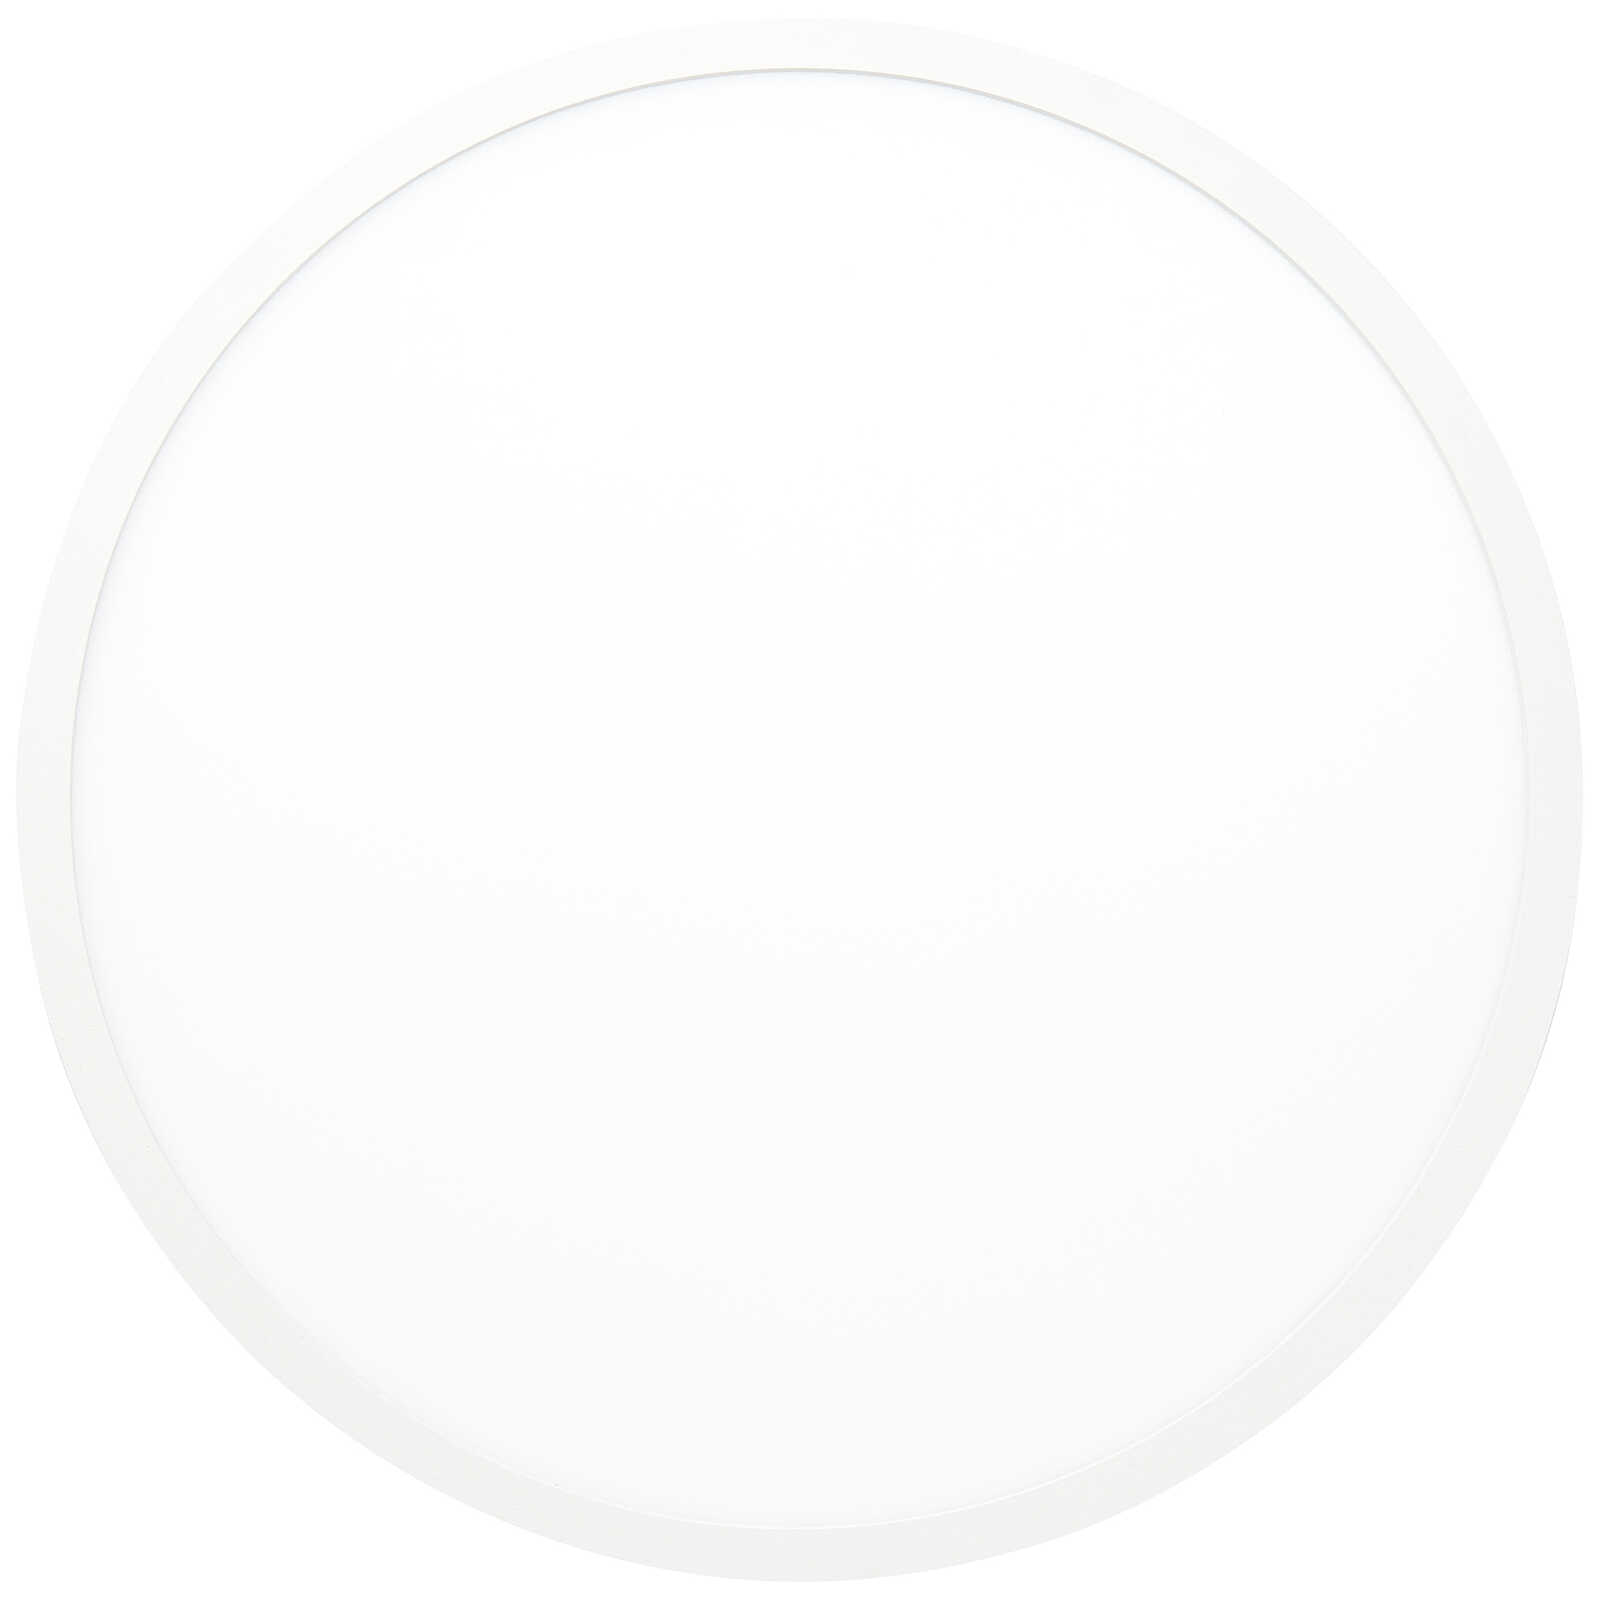             Plastic ceiling light - Constantin 5 - White
        